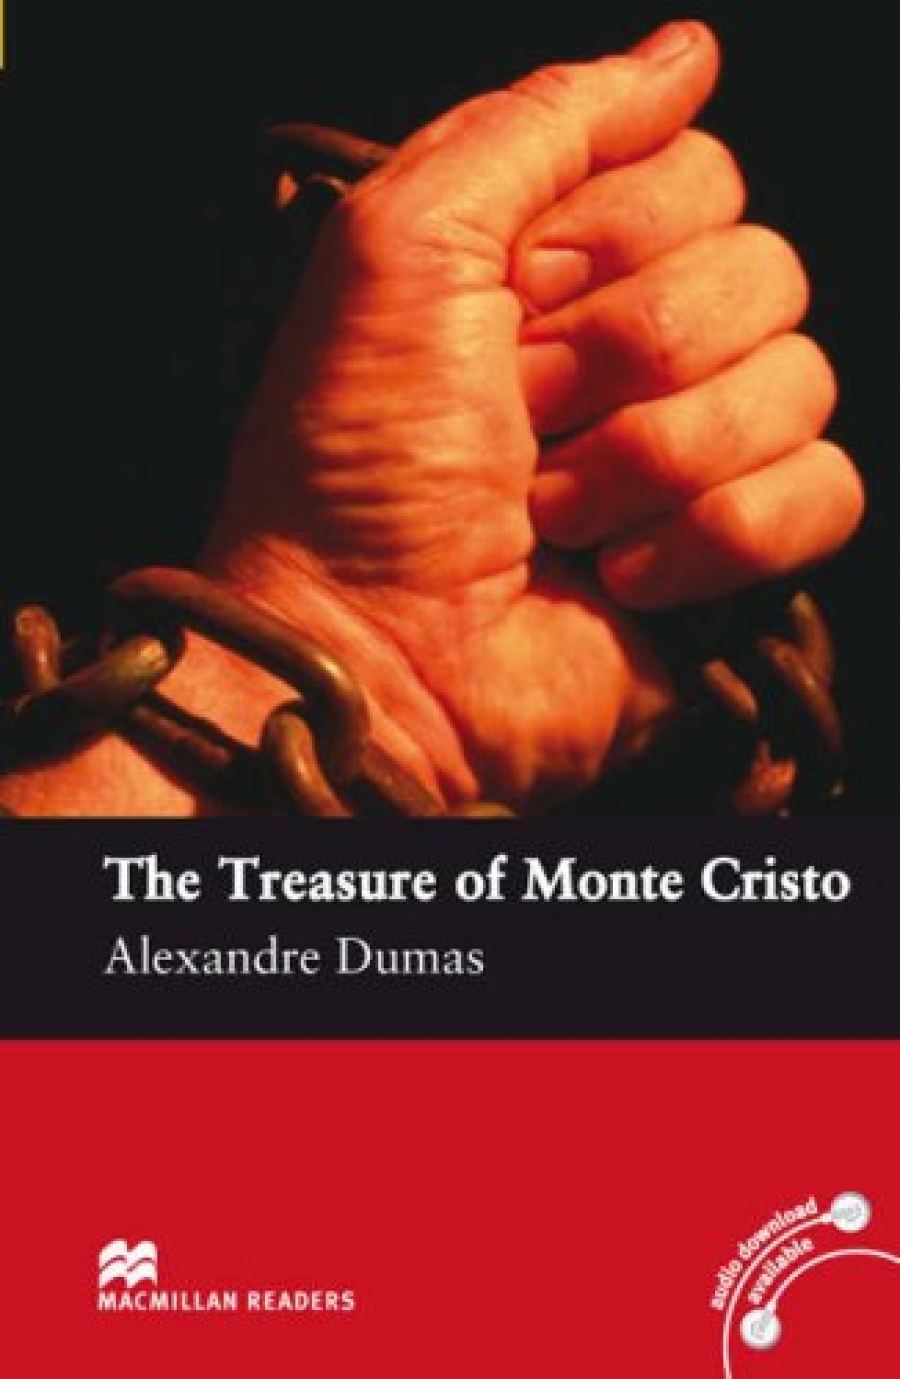 Alexandre Dumas, retold by John Escott The Treasure of Monte Cristo 